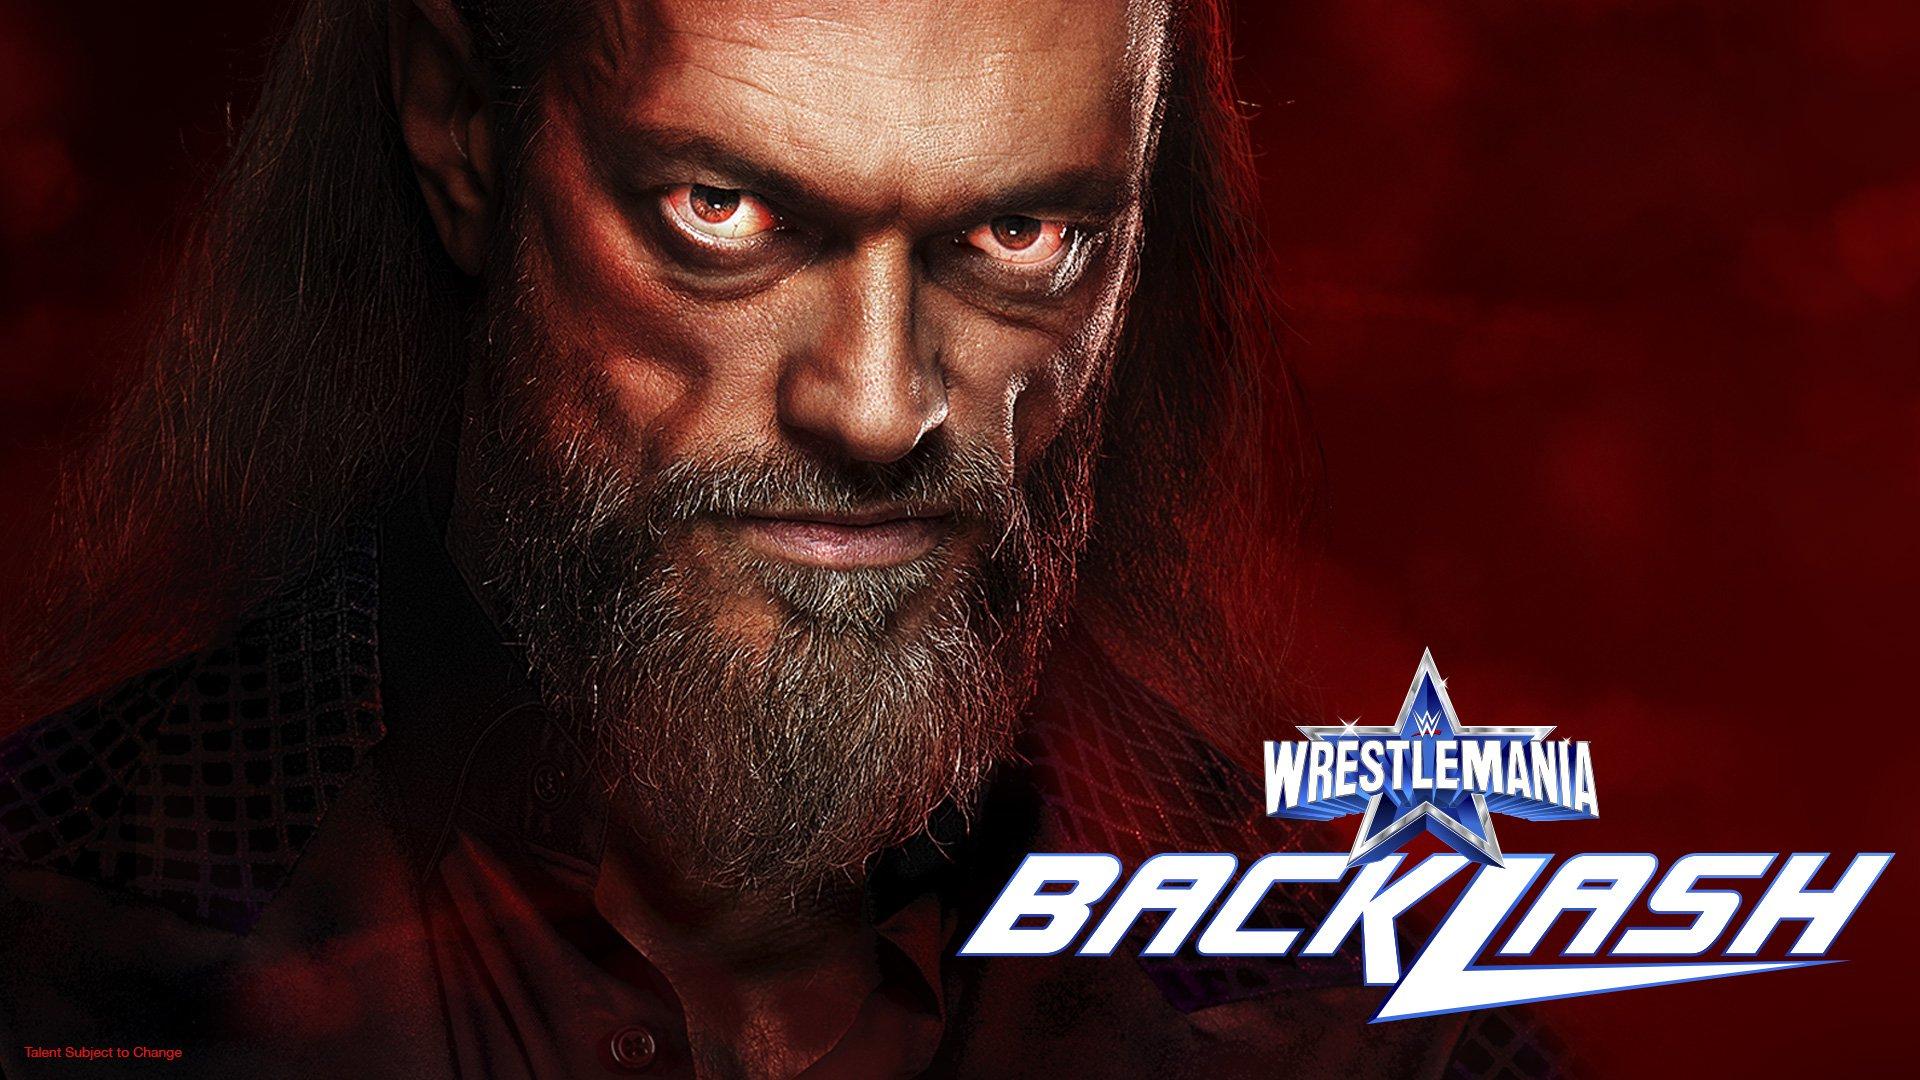 WWE WrestleMania Backlash 2022 Preview & Predictions